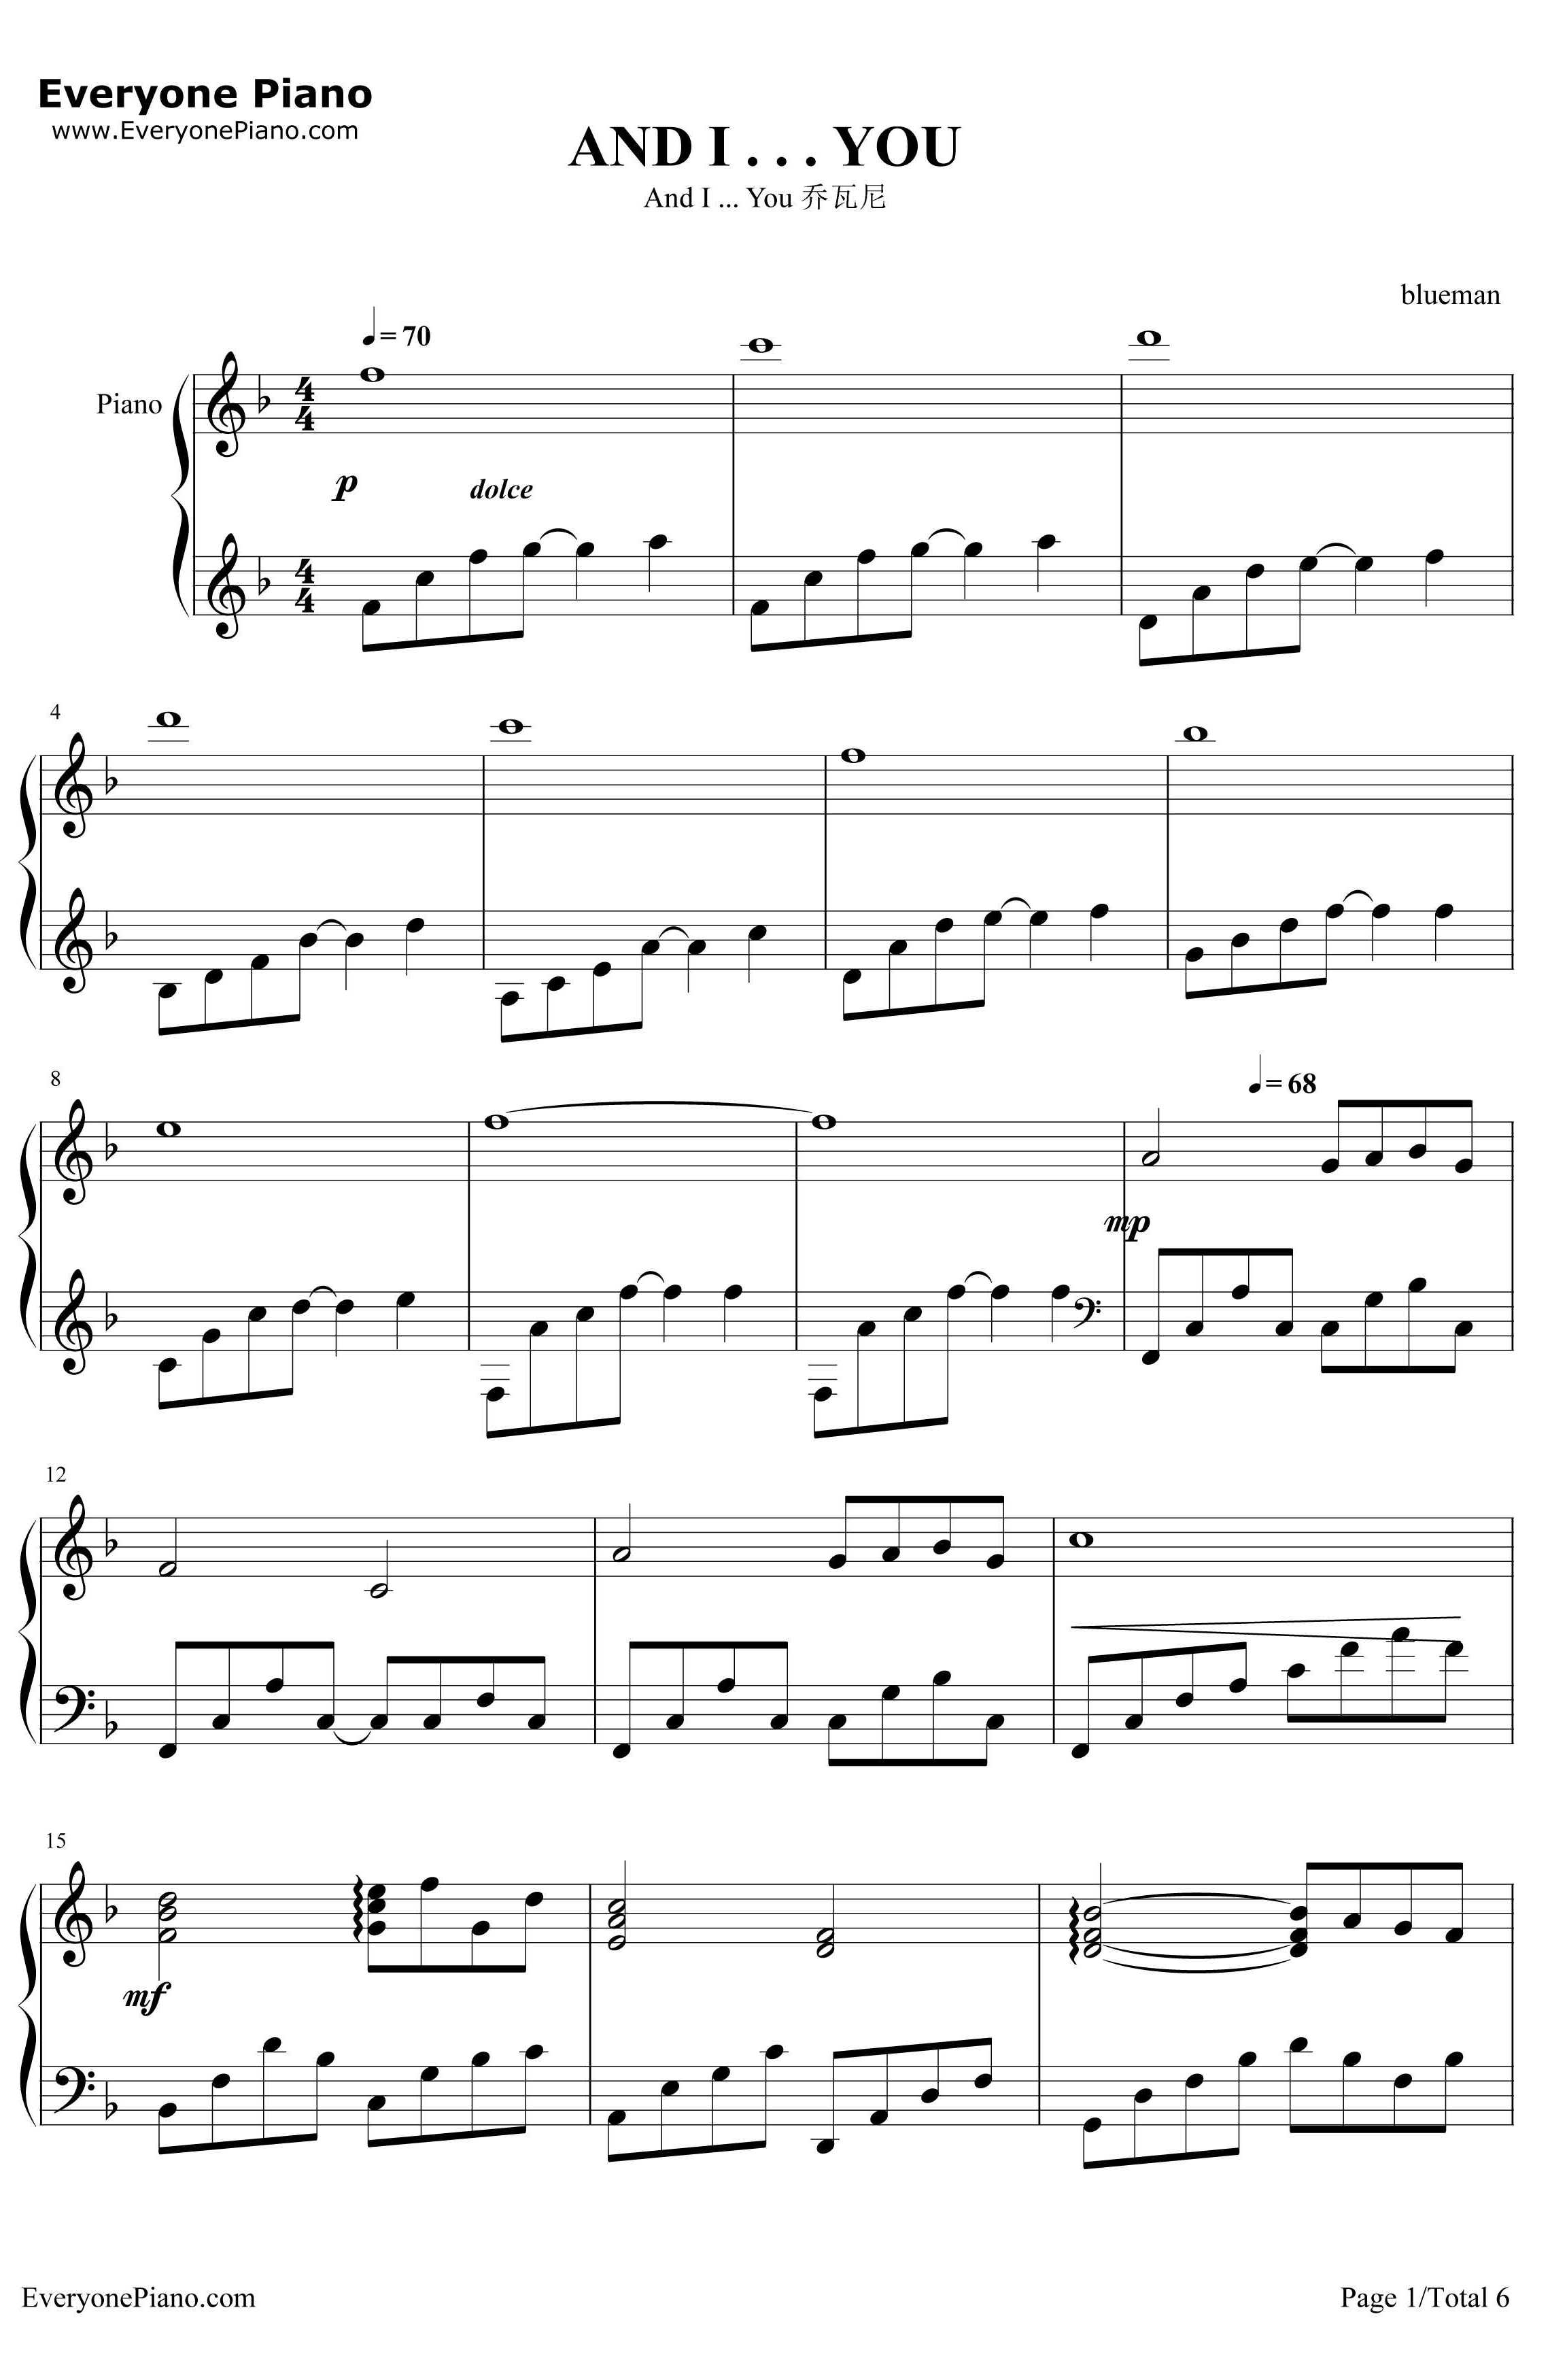 AndI...You钢琴谱-GiovanniMarradi(乔瓦尼)1